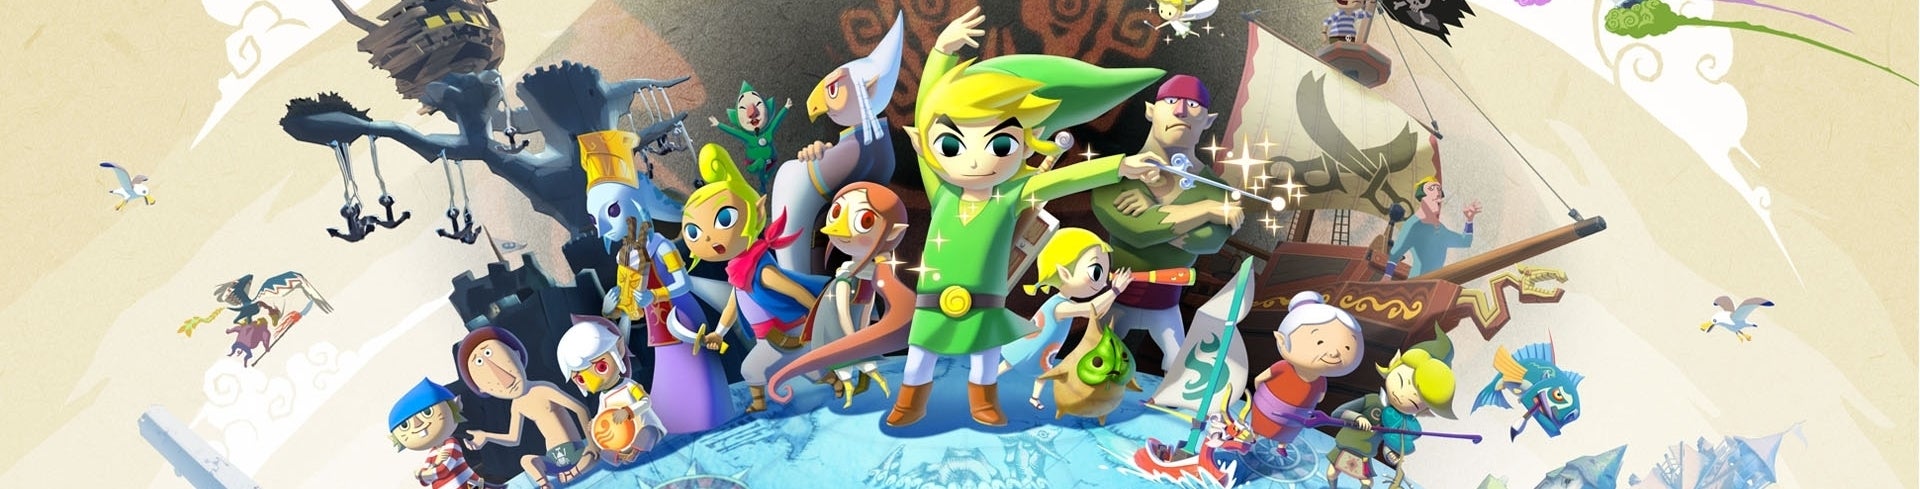 Imagen para Análisis de The Legend of Zelda: The Wind Waker HD